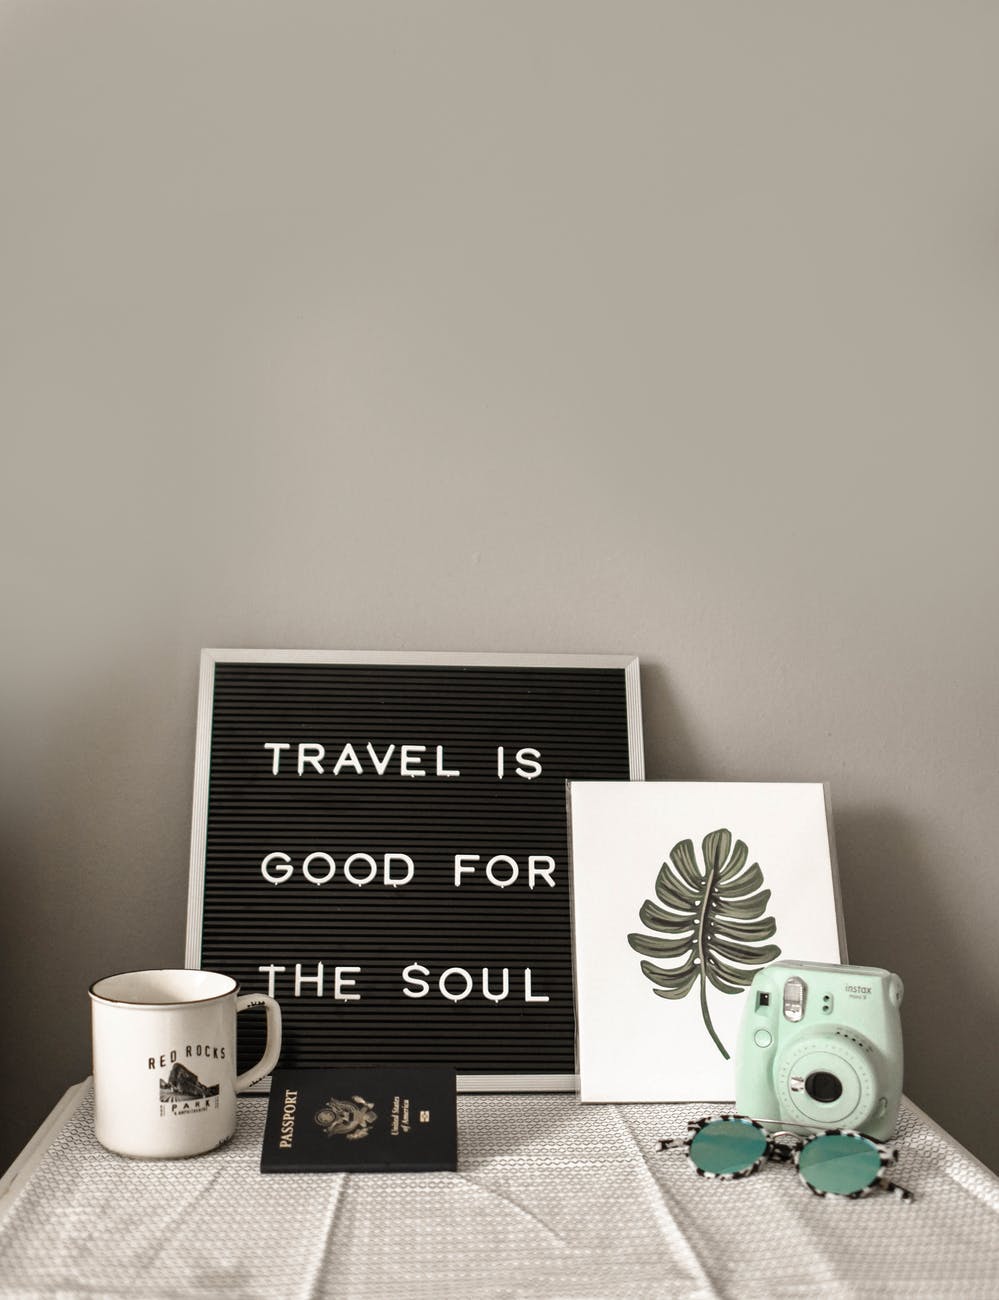 camera near white mug and a travel quote